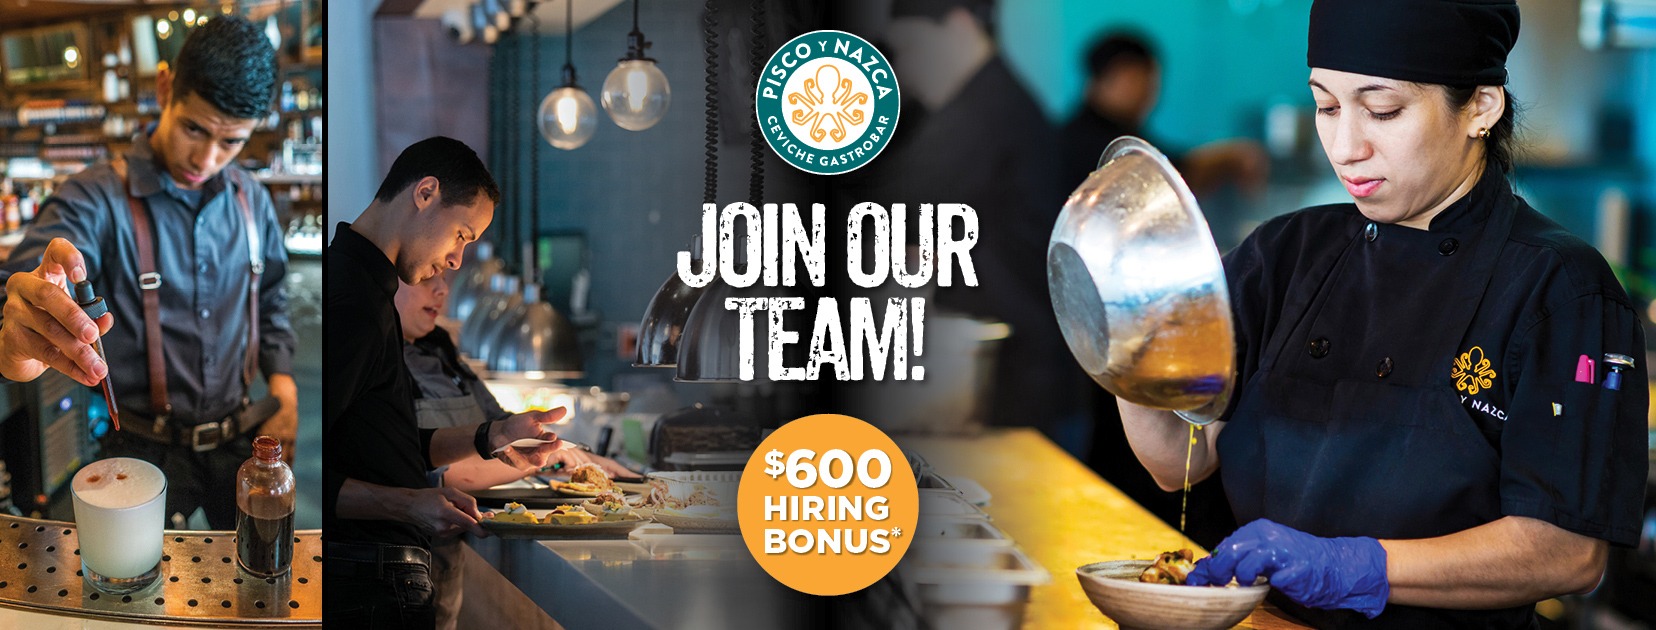 Join Our Team. $600 Hiring Bonus.